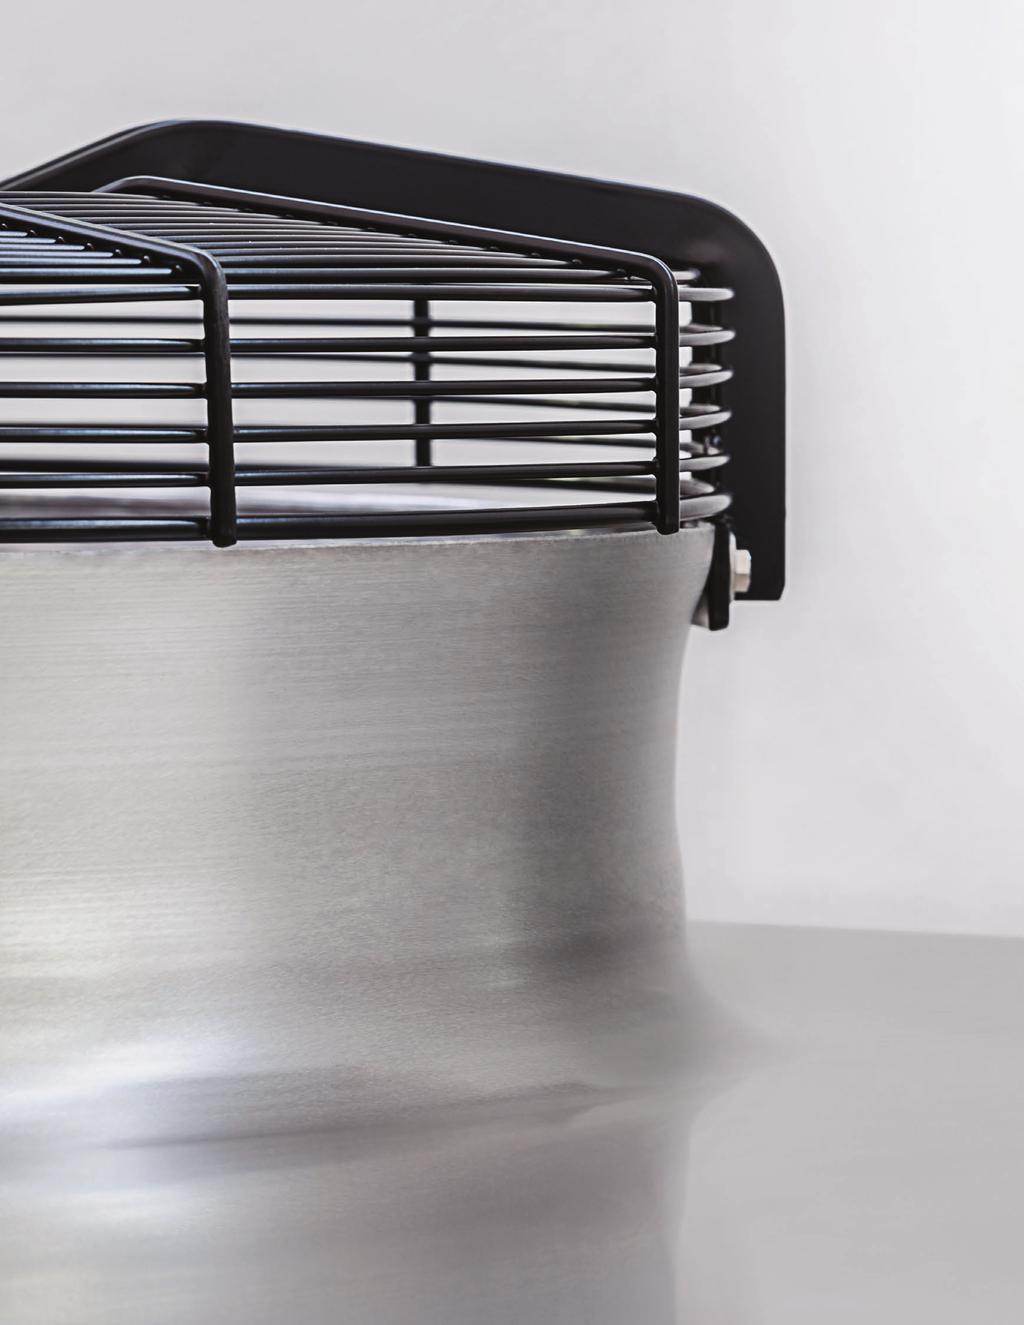 Heat Exchange olutions 100% aluminium to inteligentne rozwiązanie 100% alluminium TKmart is the new range